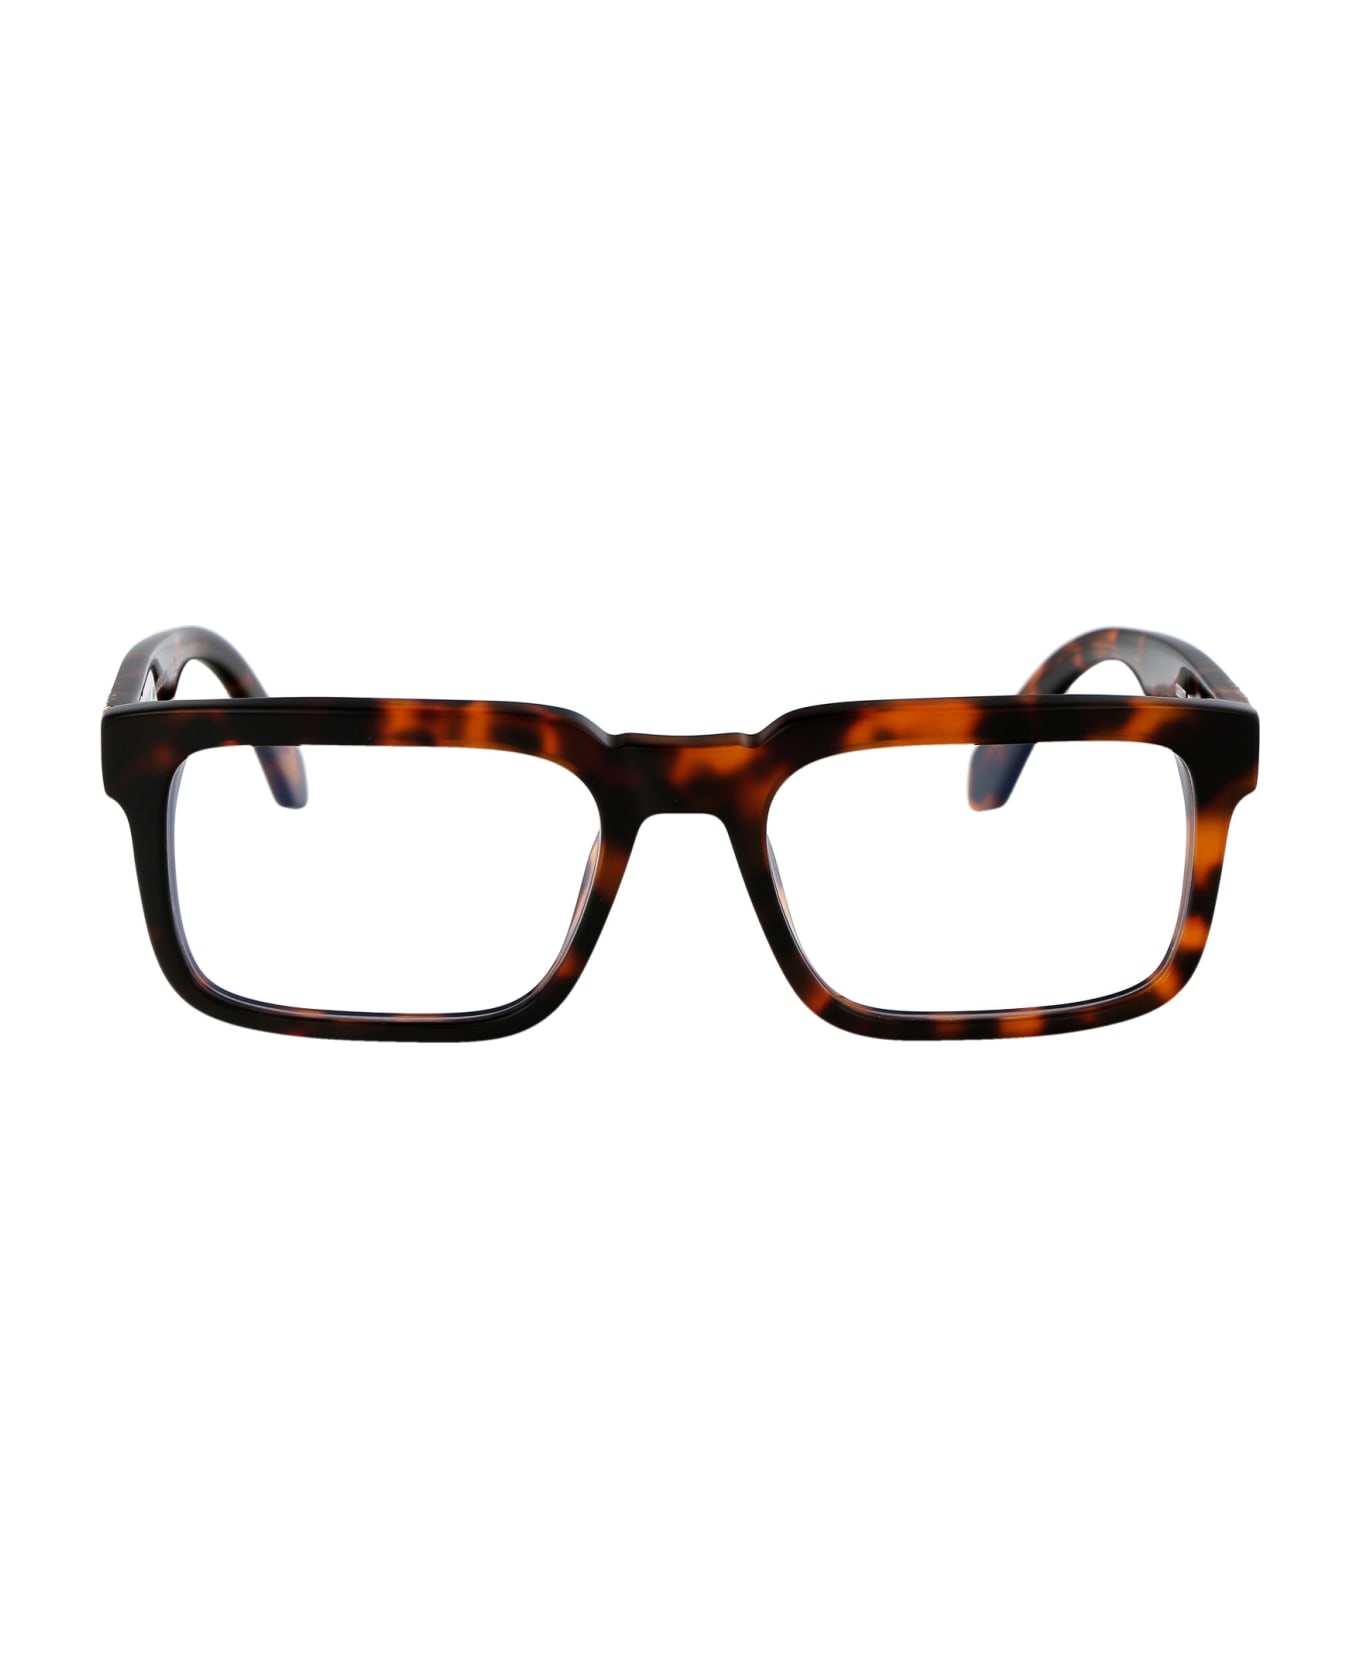 Off-White Optical Style 70 Glasses - 6000 HAVANA アイウェア